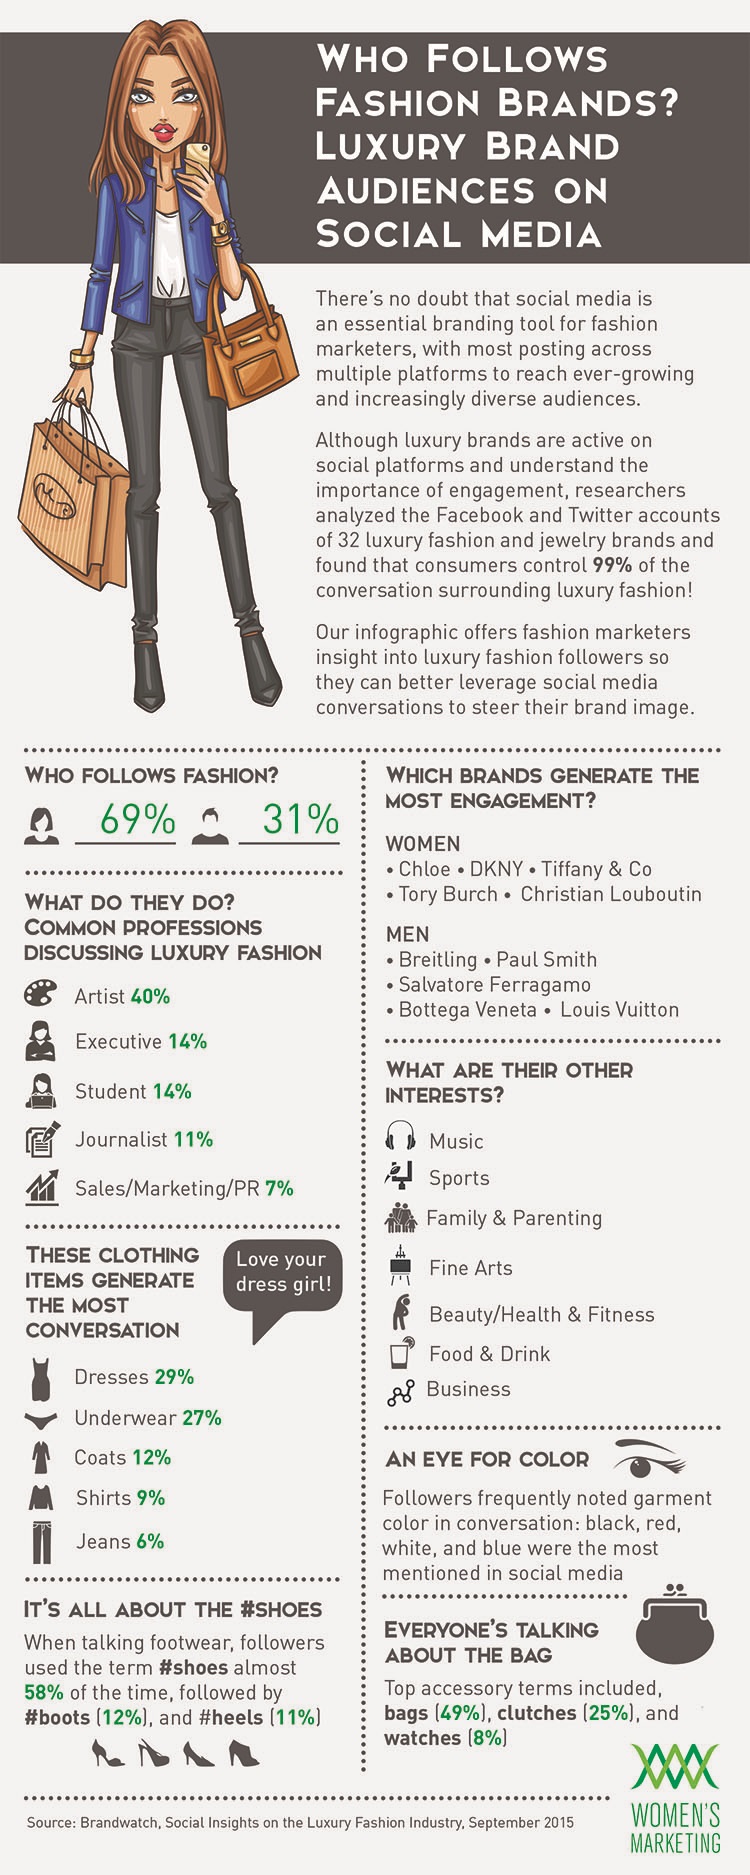 LuxuryBrandsOnSocial_Infographic.indd